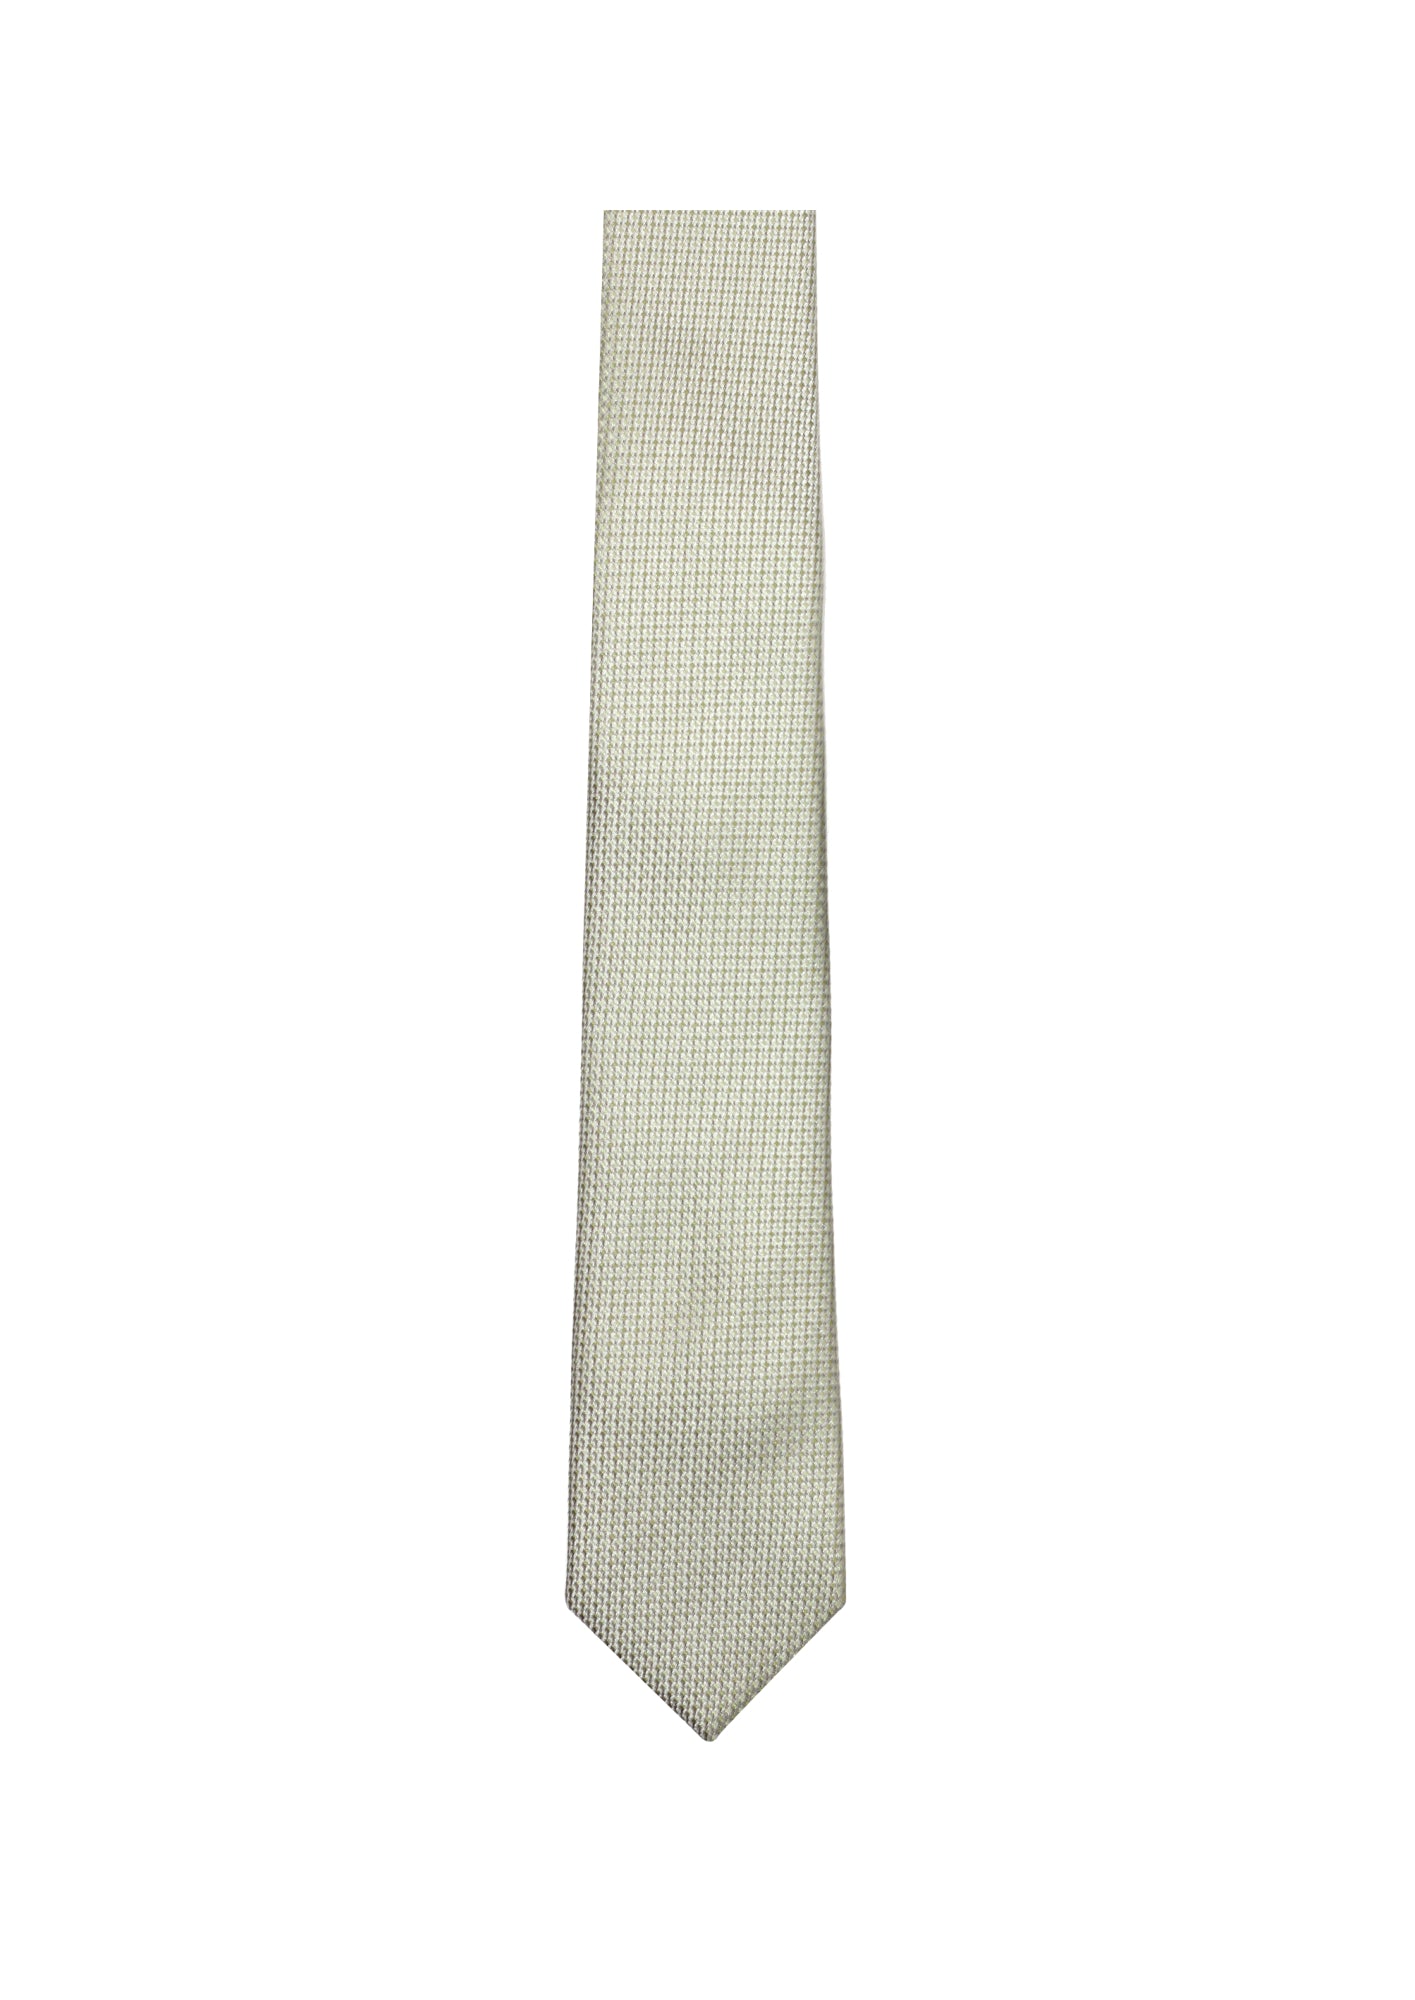 Krawatte + Tuch im Micro-Design